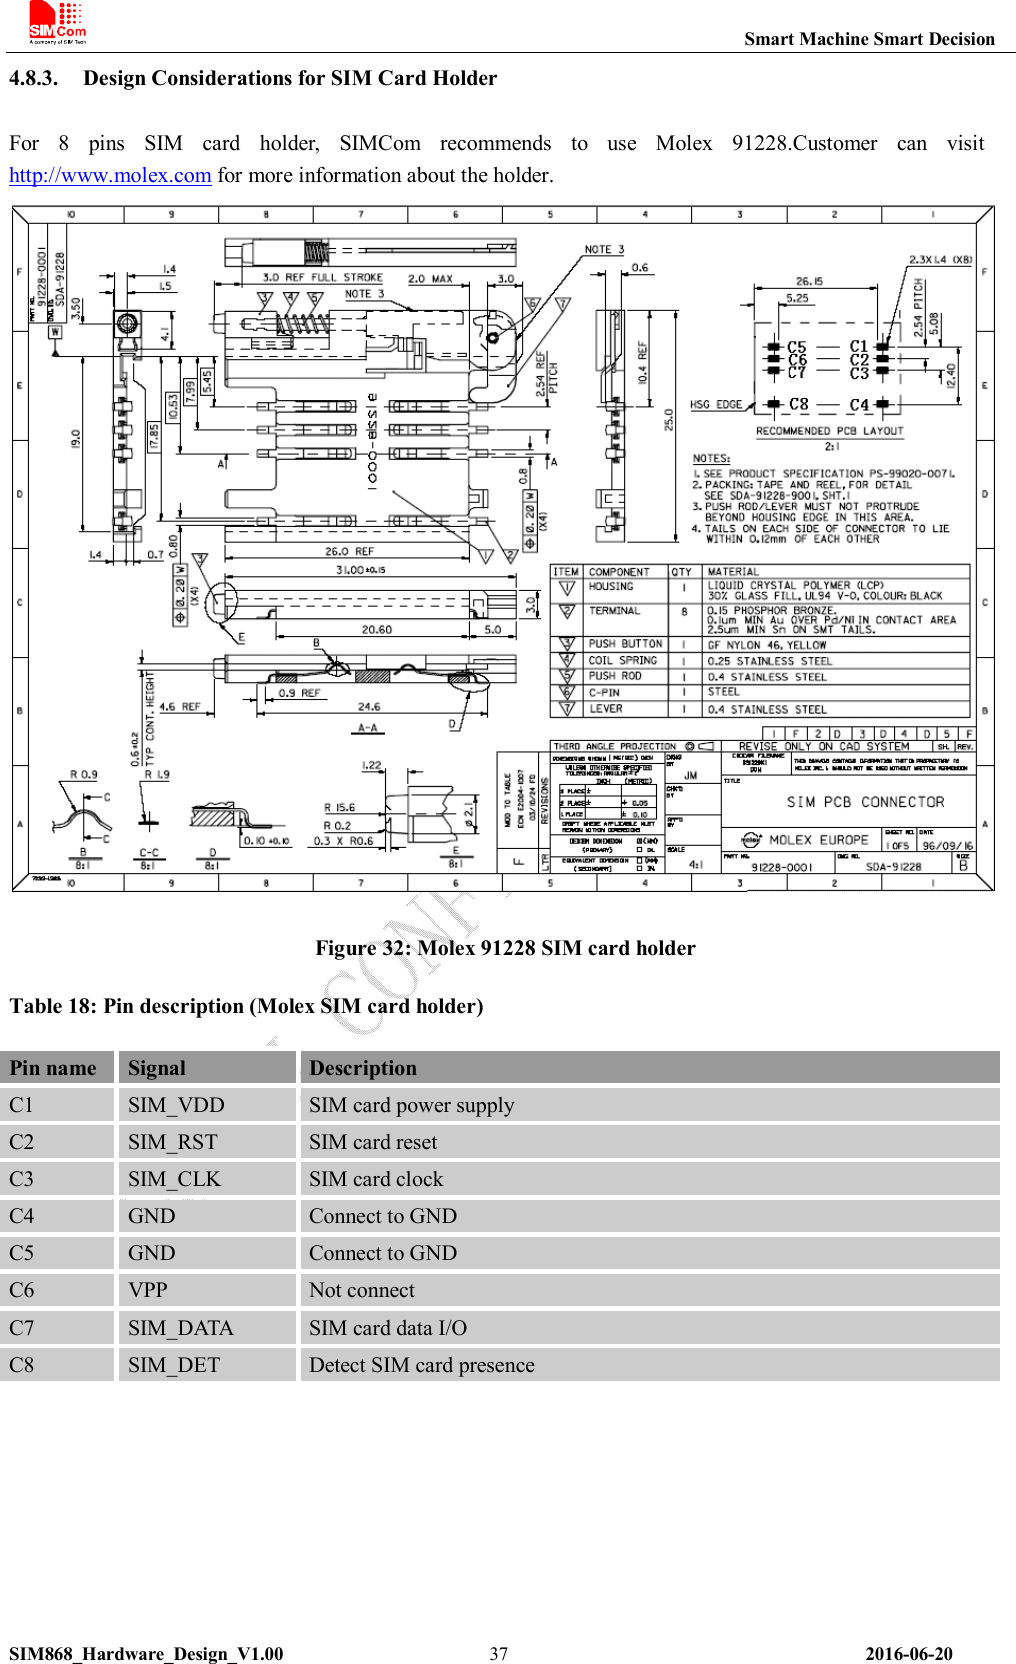                                                                       Smart Machine Smart Decision SIM868_Hardware_Design_V1.00                      37                                                                2016-06-20 4.8.3. Design Considerations for SIM Card Holder  For  8  pins  SIM  card  holder,  SIMCom  recommends  to  use  Molex  91228.Customer  can  visit http://www.molex.com for more information about the holder.  Figure 32: Molex 91228 SIM card holder Table 18: Pin description (Molex SIM card holder) Pin name Signal  Description C1  SIM_VDD  SIM card power supply C2  SIM_RST  SIM card reset C3  SIM_CLK  SIM card clock C4  GND  Connect to GND C5  GND  Connect to GND C6  VPP  Not connect C7  SIM_DATA  SIM card data I/O C8  SIM_DET  Detect SIM card presence  